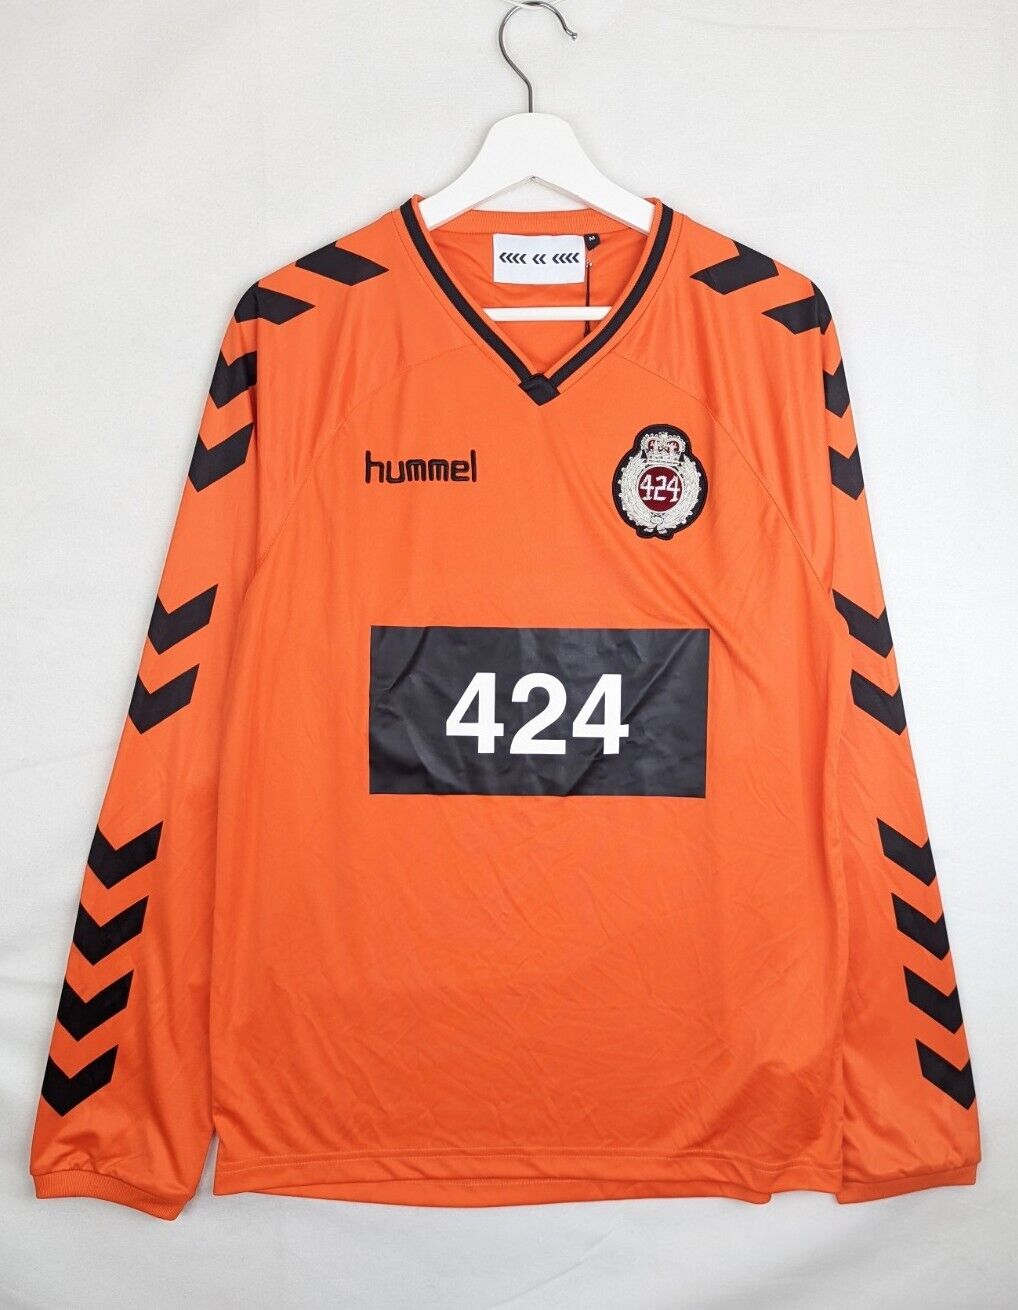 Hummel x 424 Football Shirt Long Sleeve - Orange Soccer Jersey - Medium M